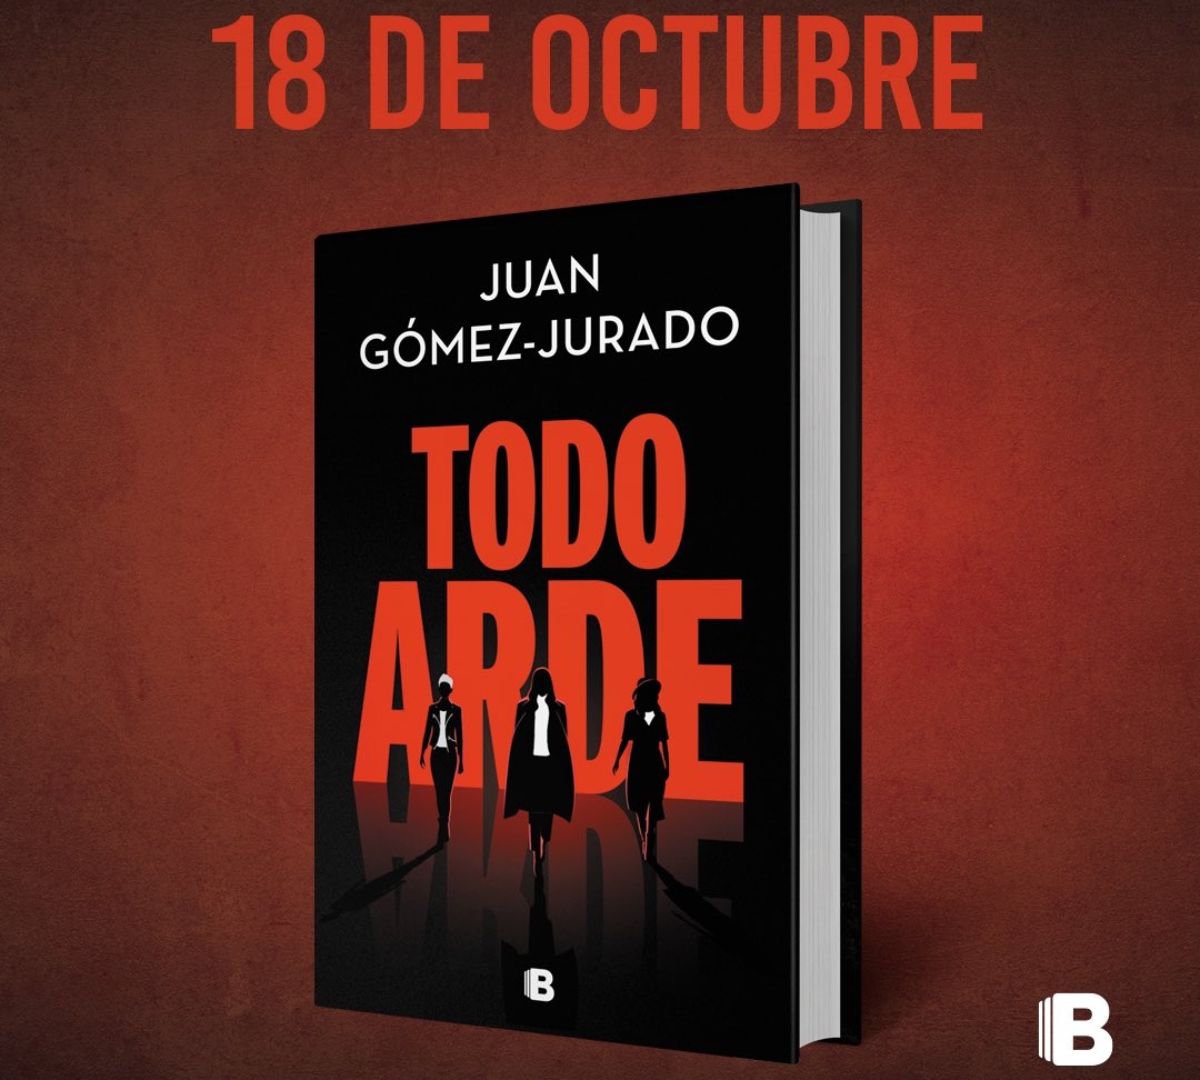 Todo arde, Juan Gómez-Jurado - Me encanta leer